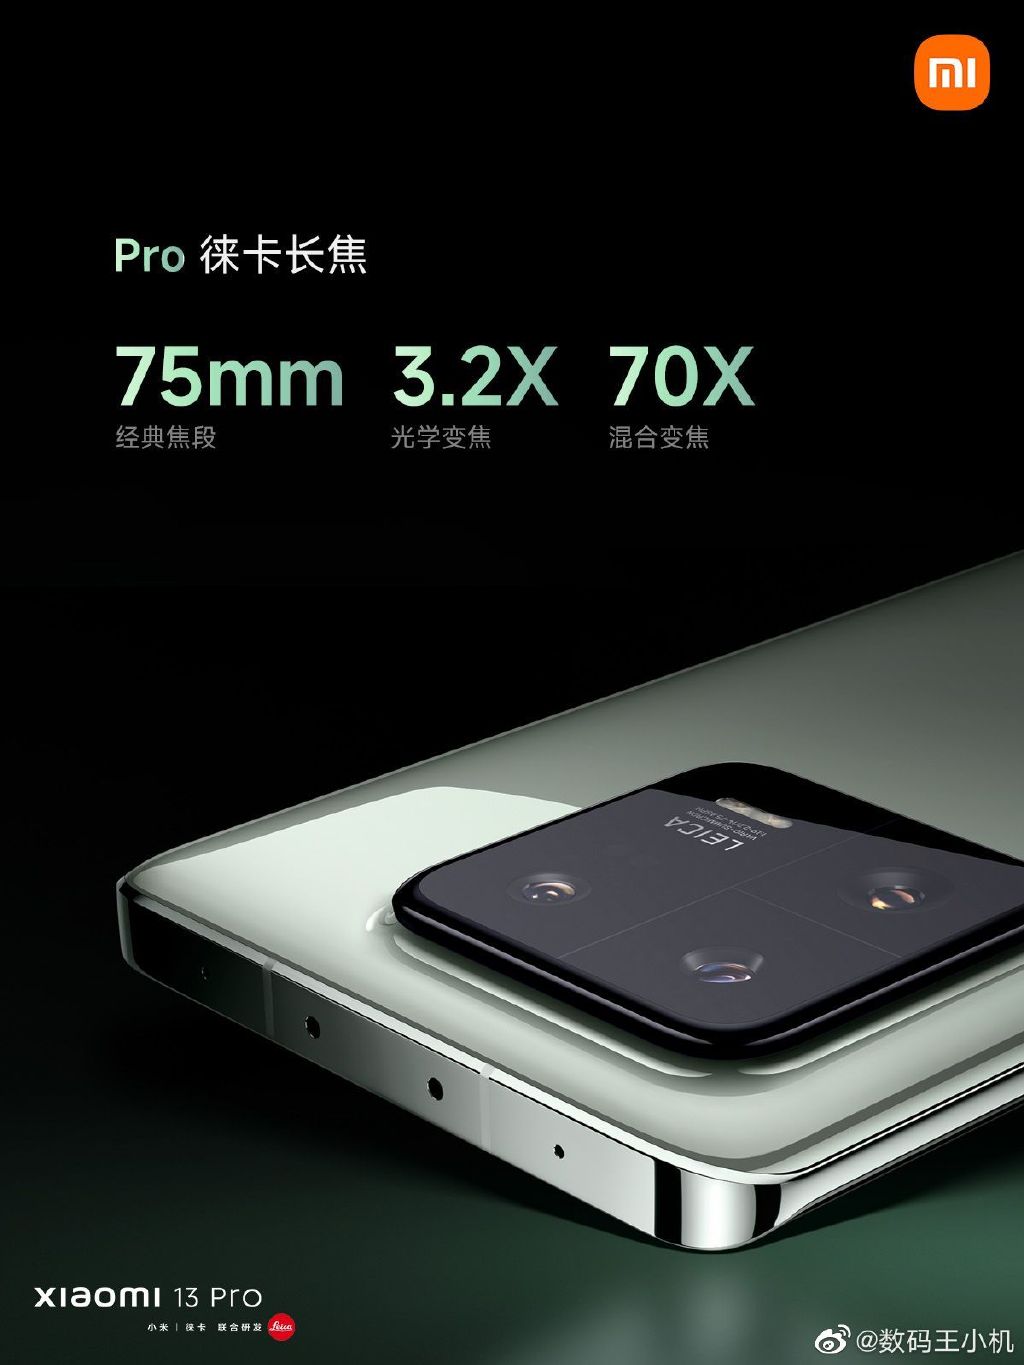 Xiaomi Mi 13 Pro camera